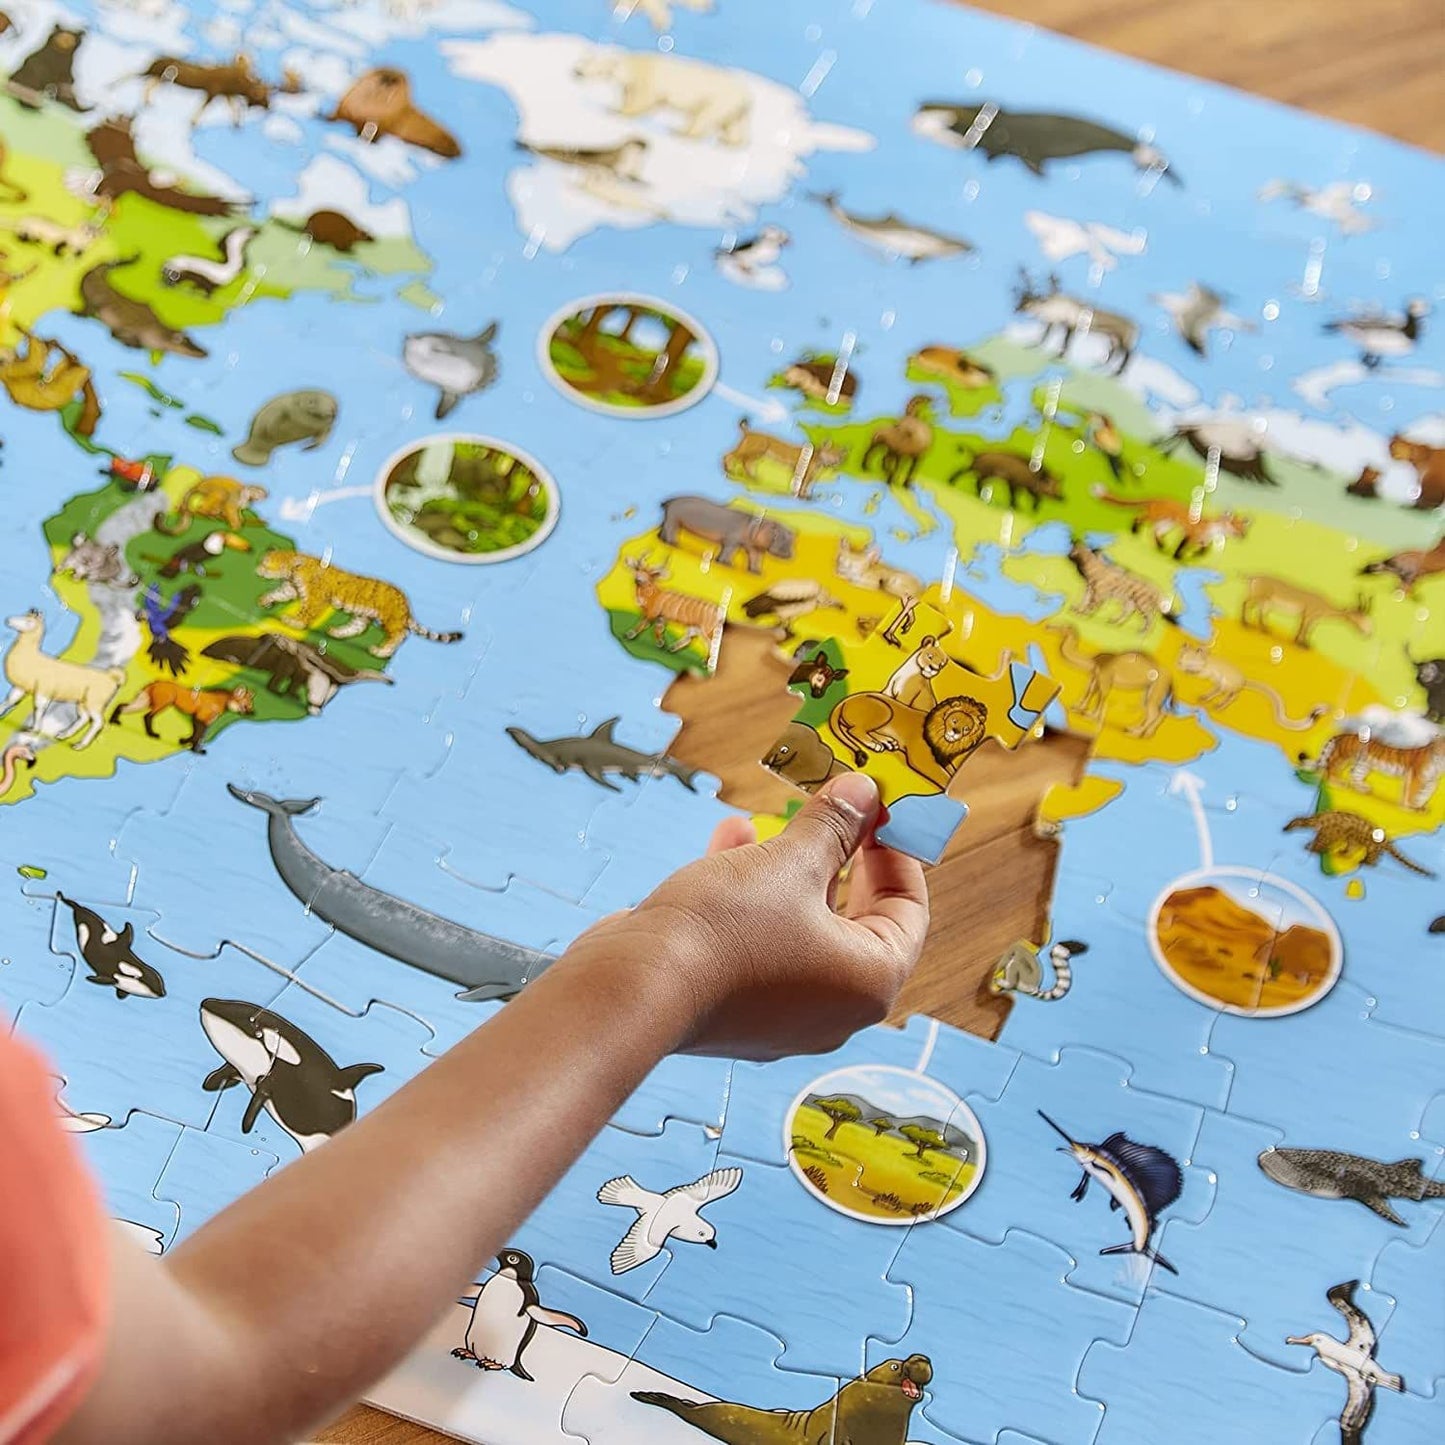 Orchard Toys - Animal World - 150 Piece Jigsaw Puzzle